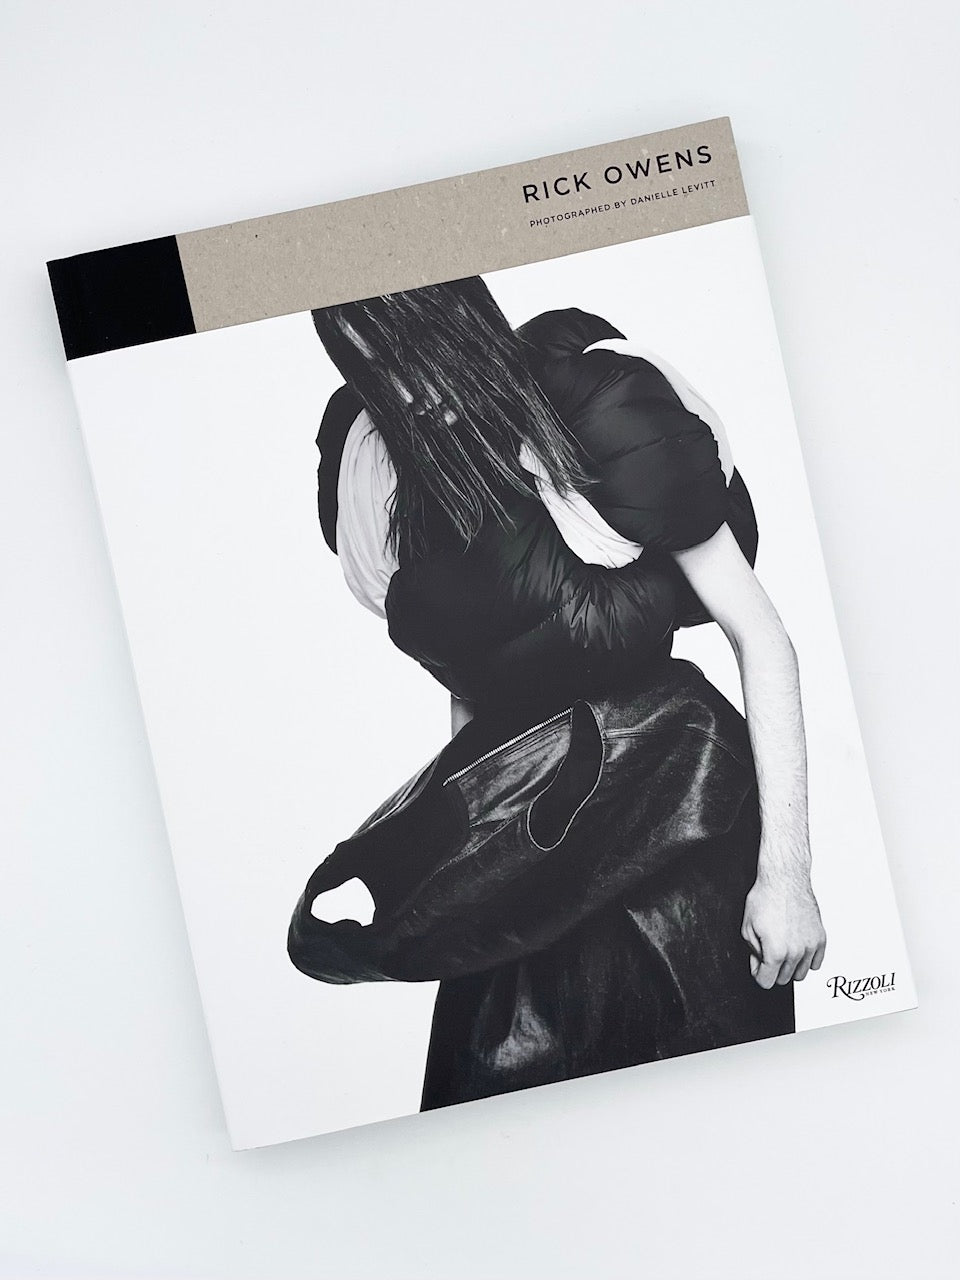 Rick Owens book – JUS